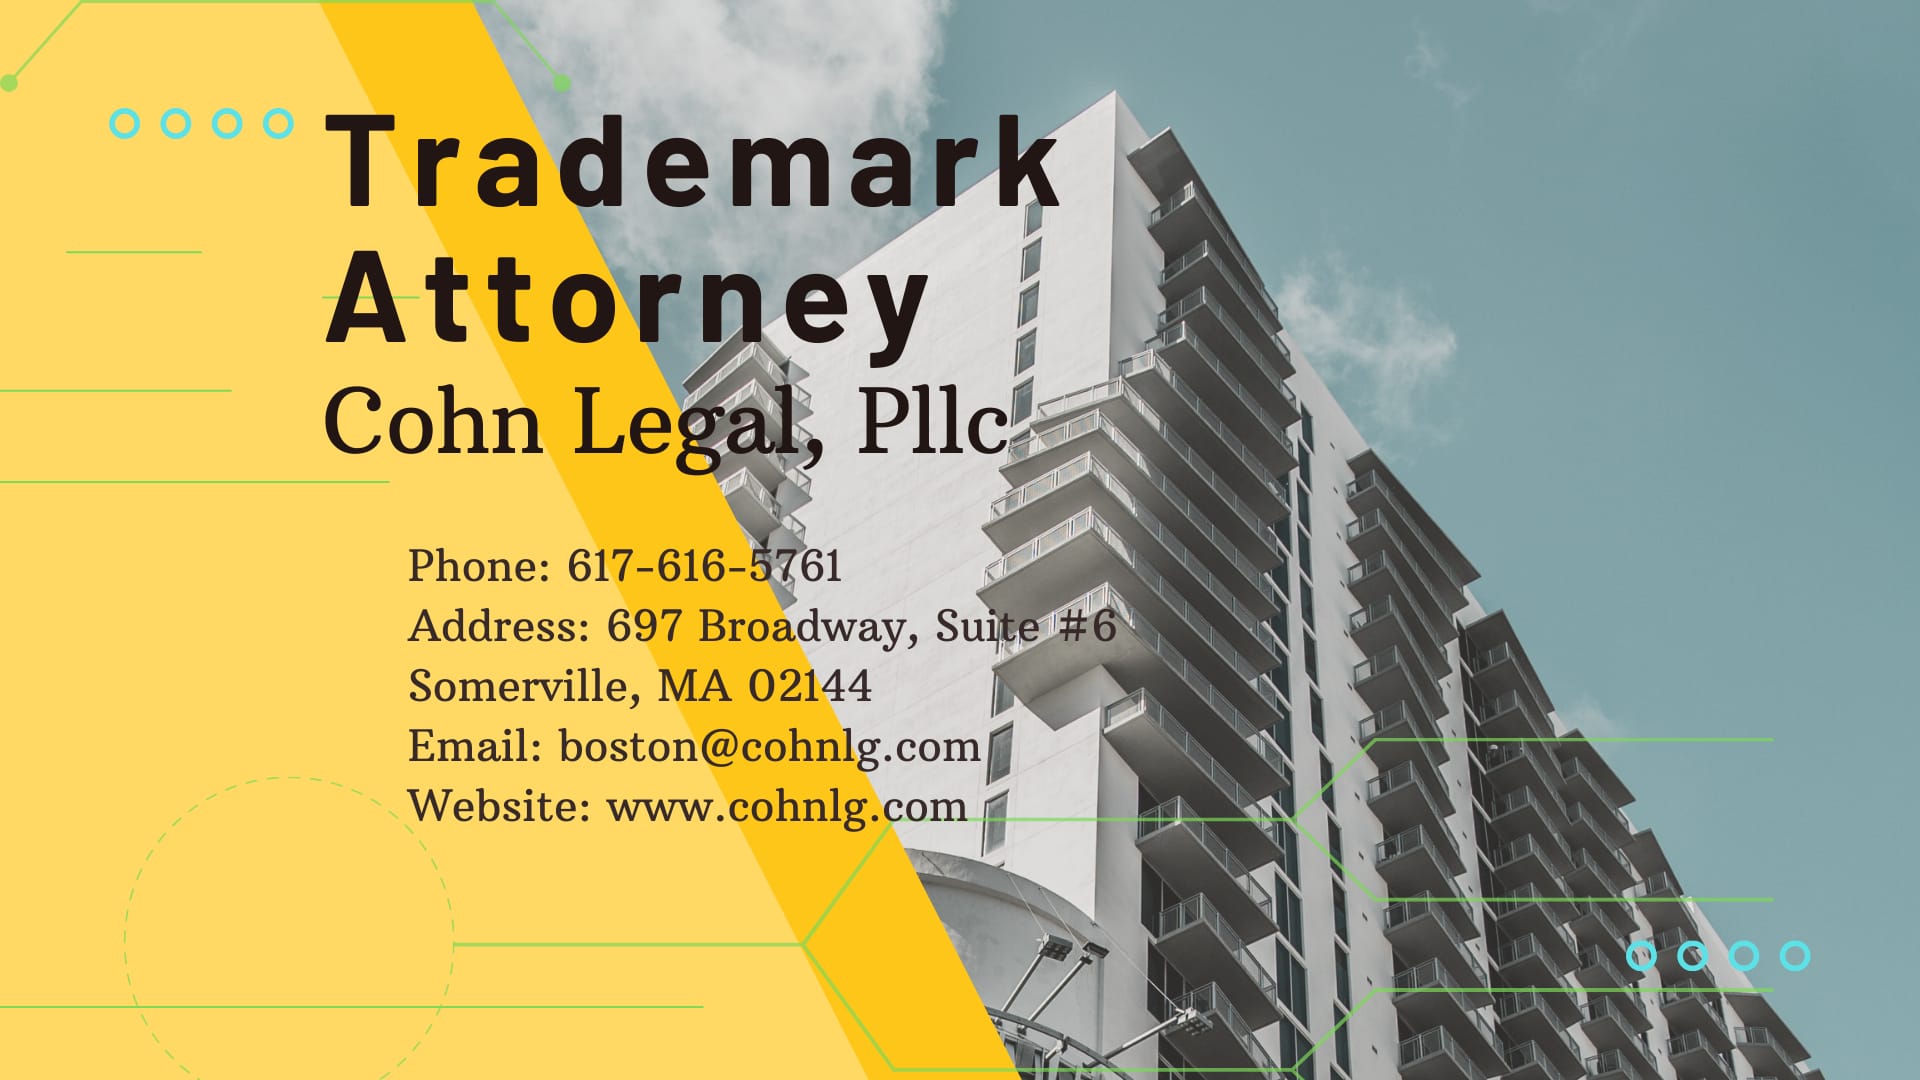 Cohn Legal, PLLC - Trademark Lawyers Boston - Somerville, MA, US, trademarking search